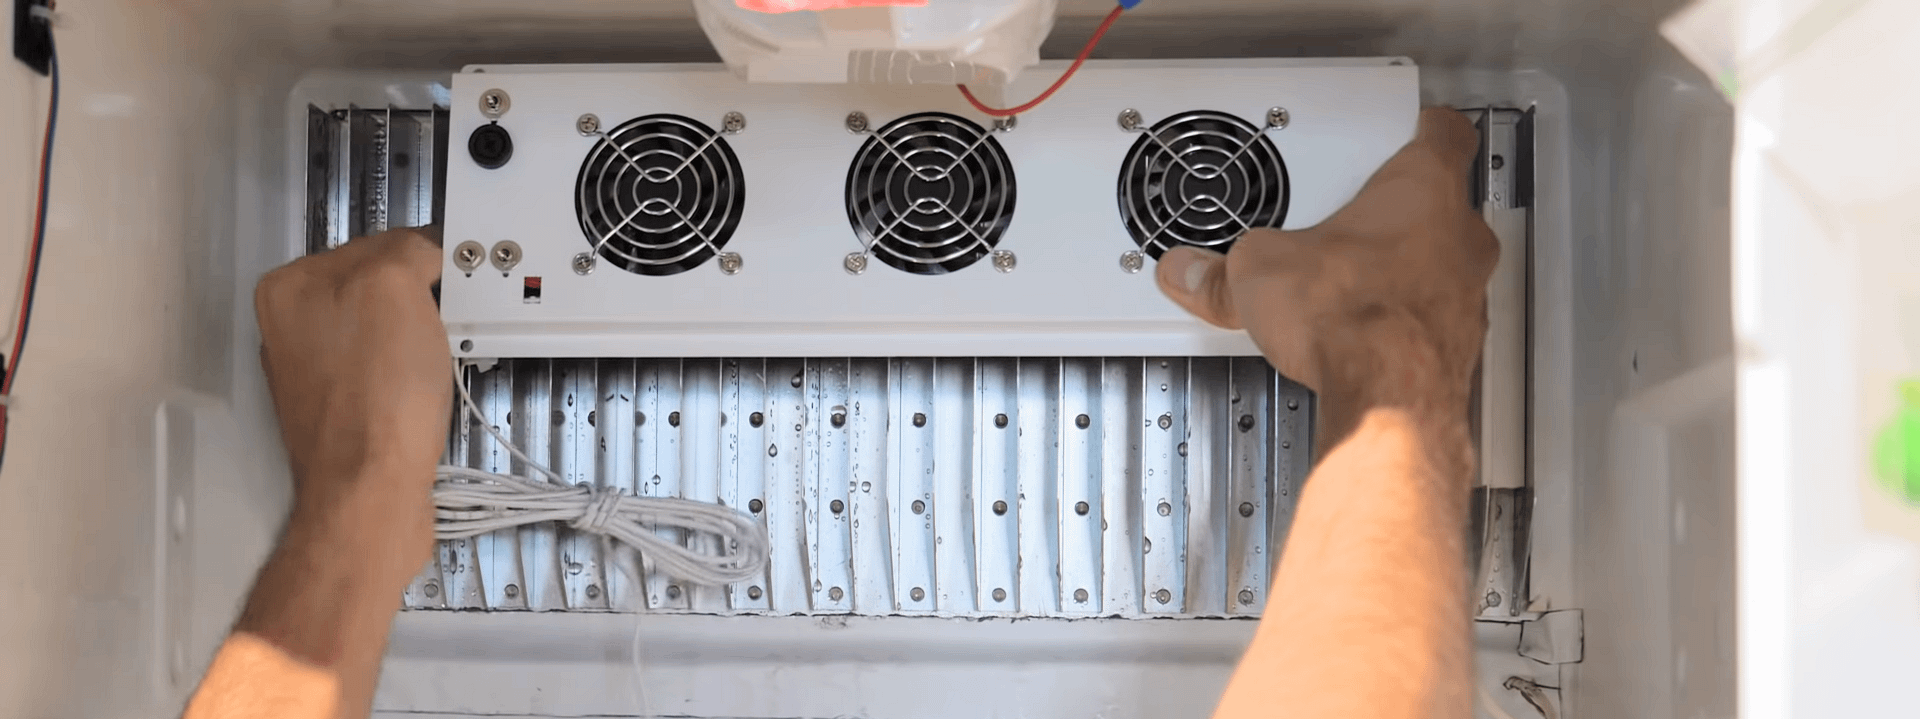 Refrigerator Fan Not Working: 10 Easy Ways To Fix It Now